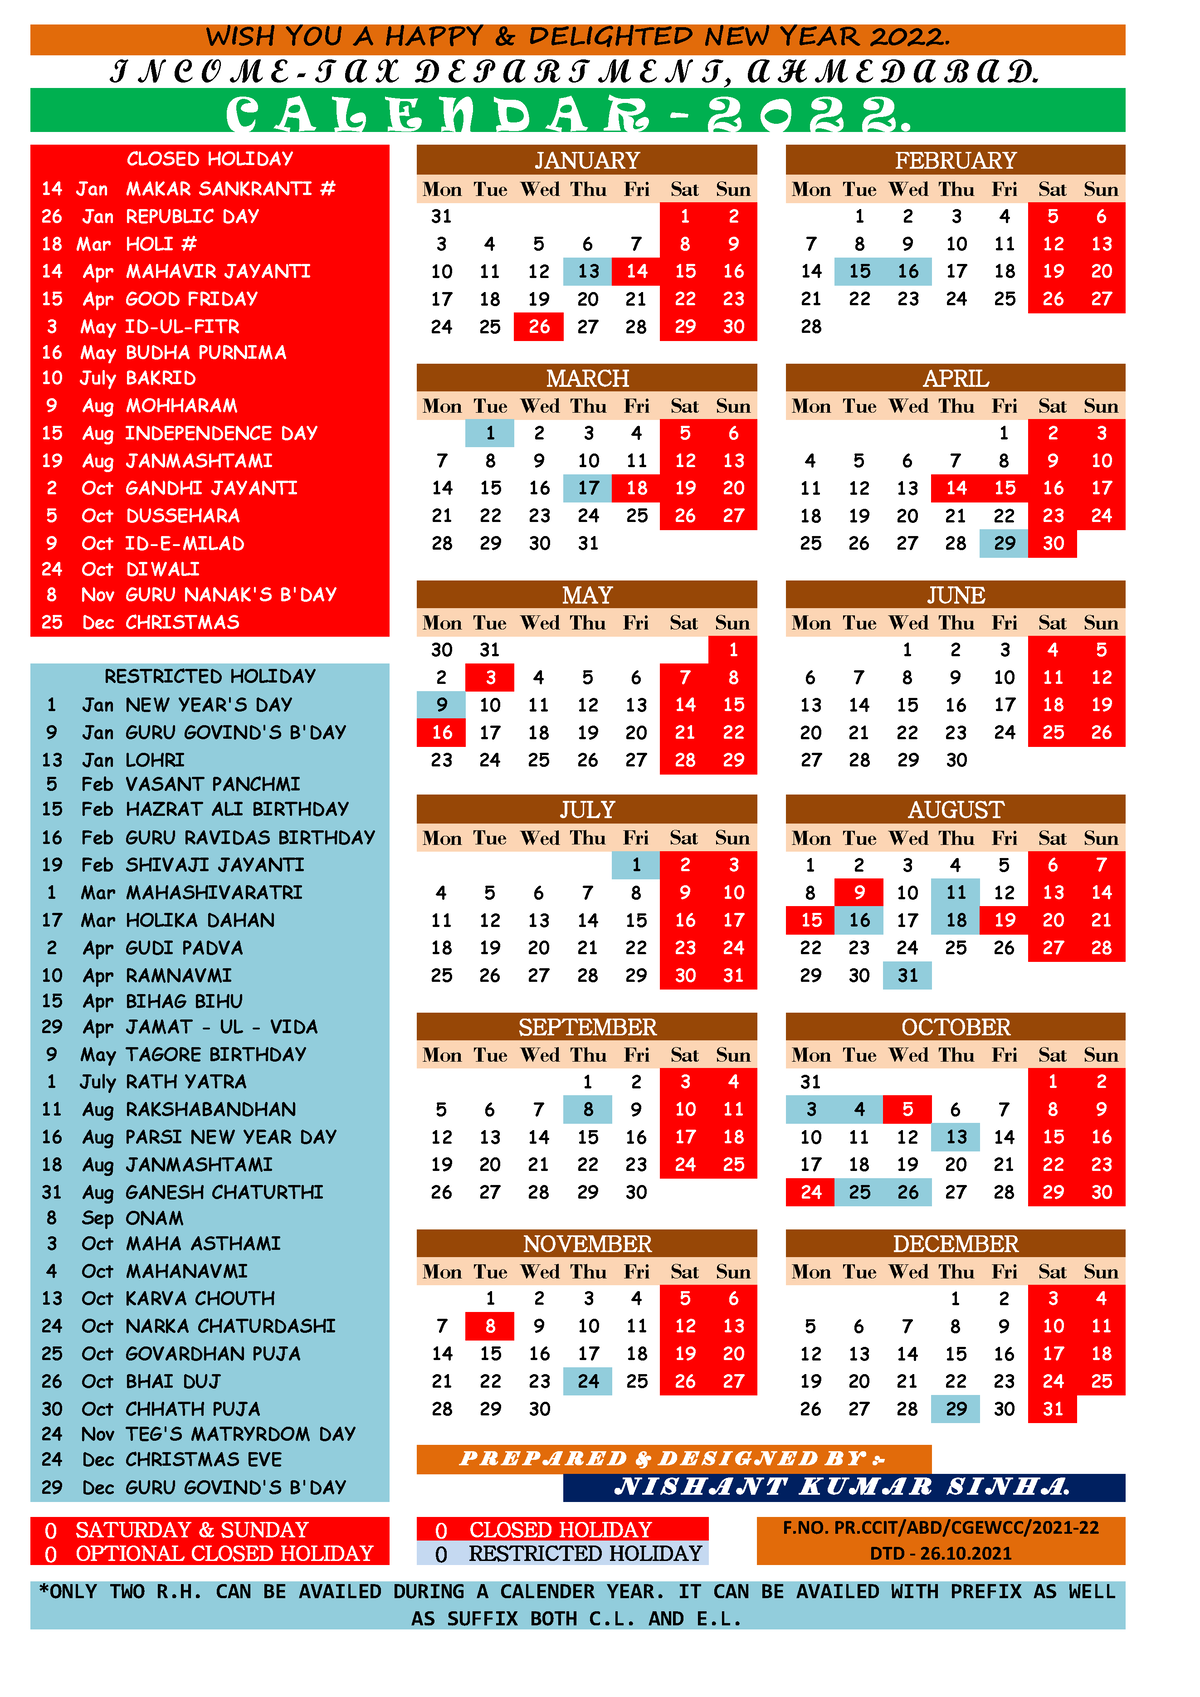 Calendar 2022 by Nishant - 14 Jan MAKAR SANKRANTI # Mon Tue Wed Thu Fri ...